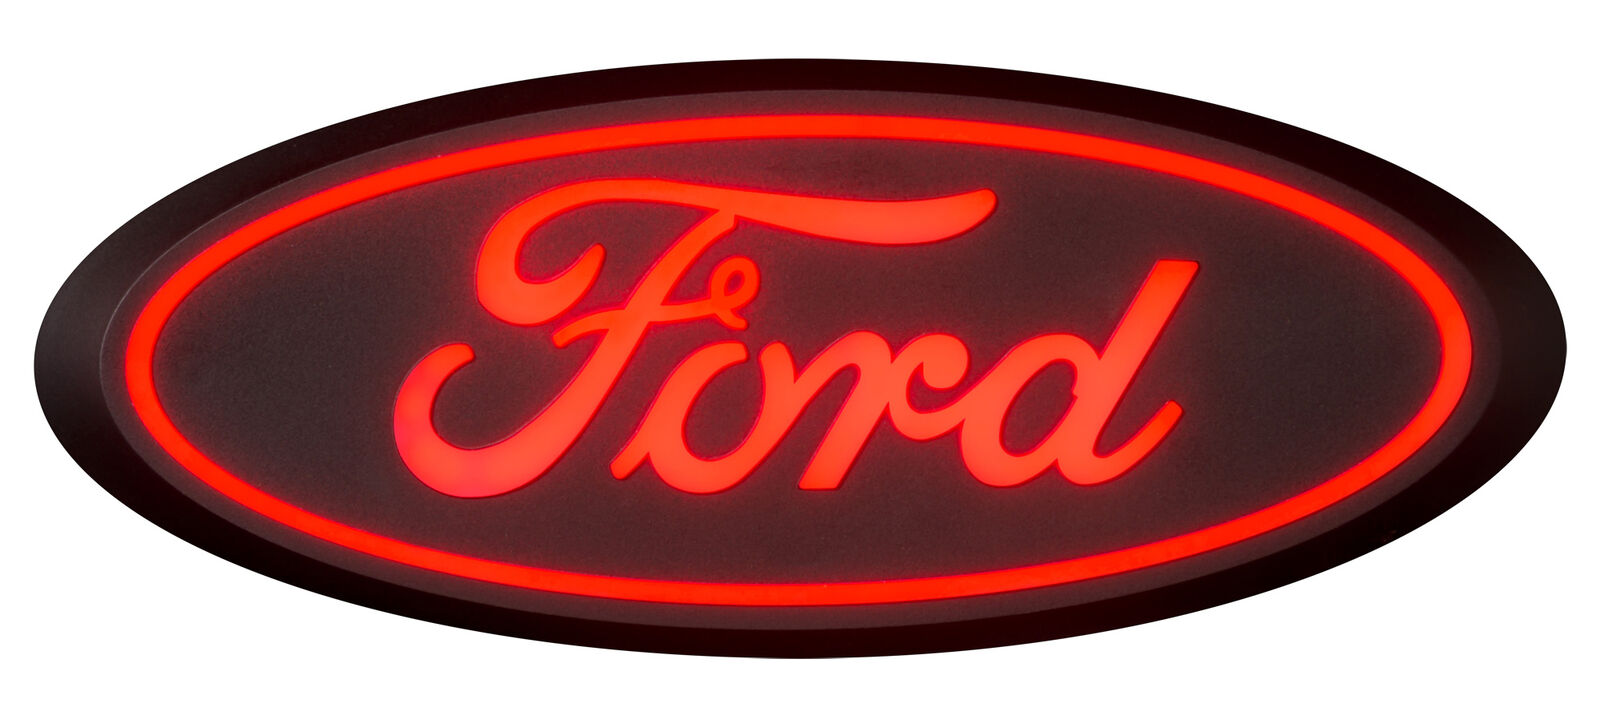 https://thehidfactory.com/wp-content/uploads/2020/02/Ford-LED-Grille-Emblem-11.jpg